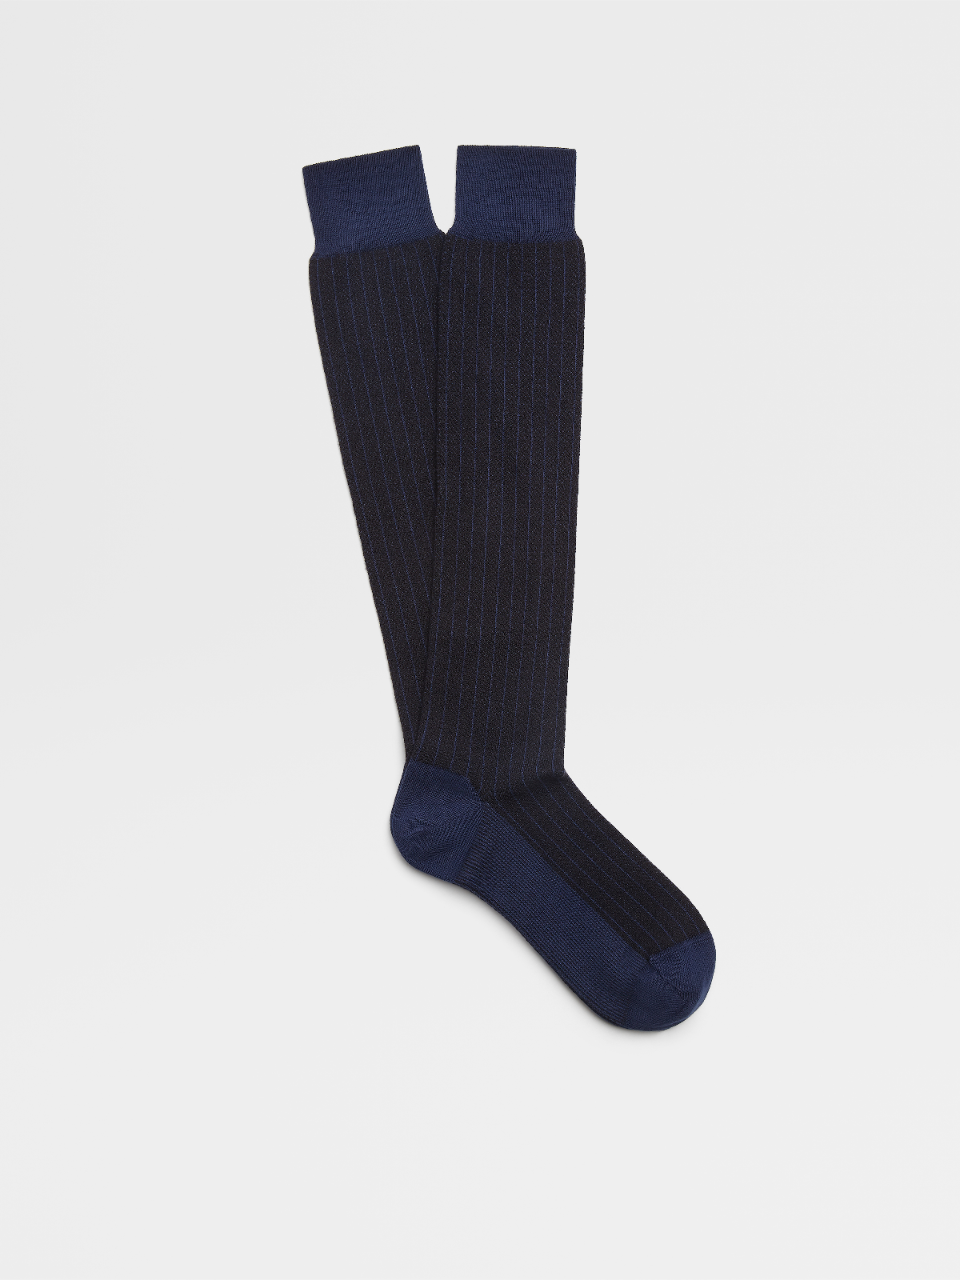 Black Herringbone Wool and Cotton Mid Calf Socks